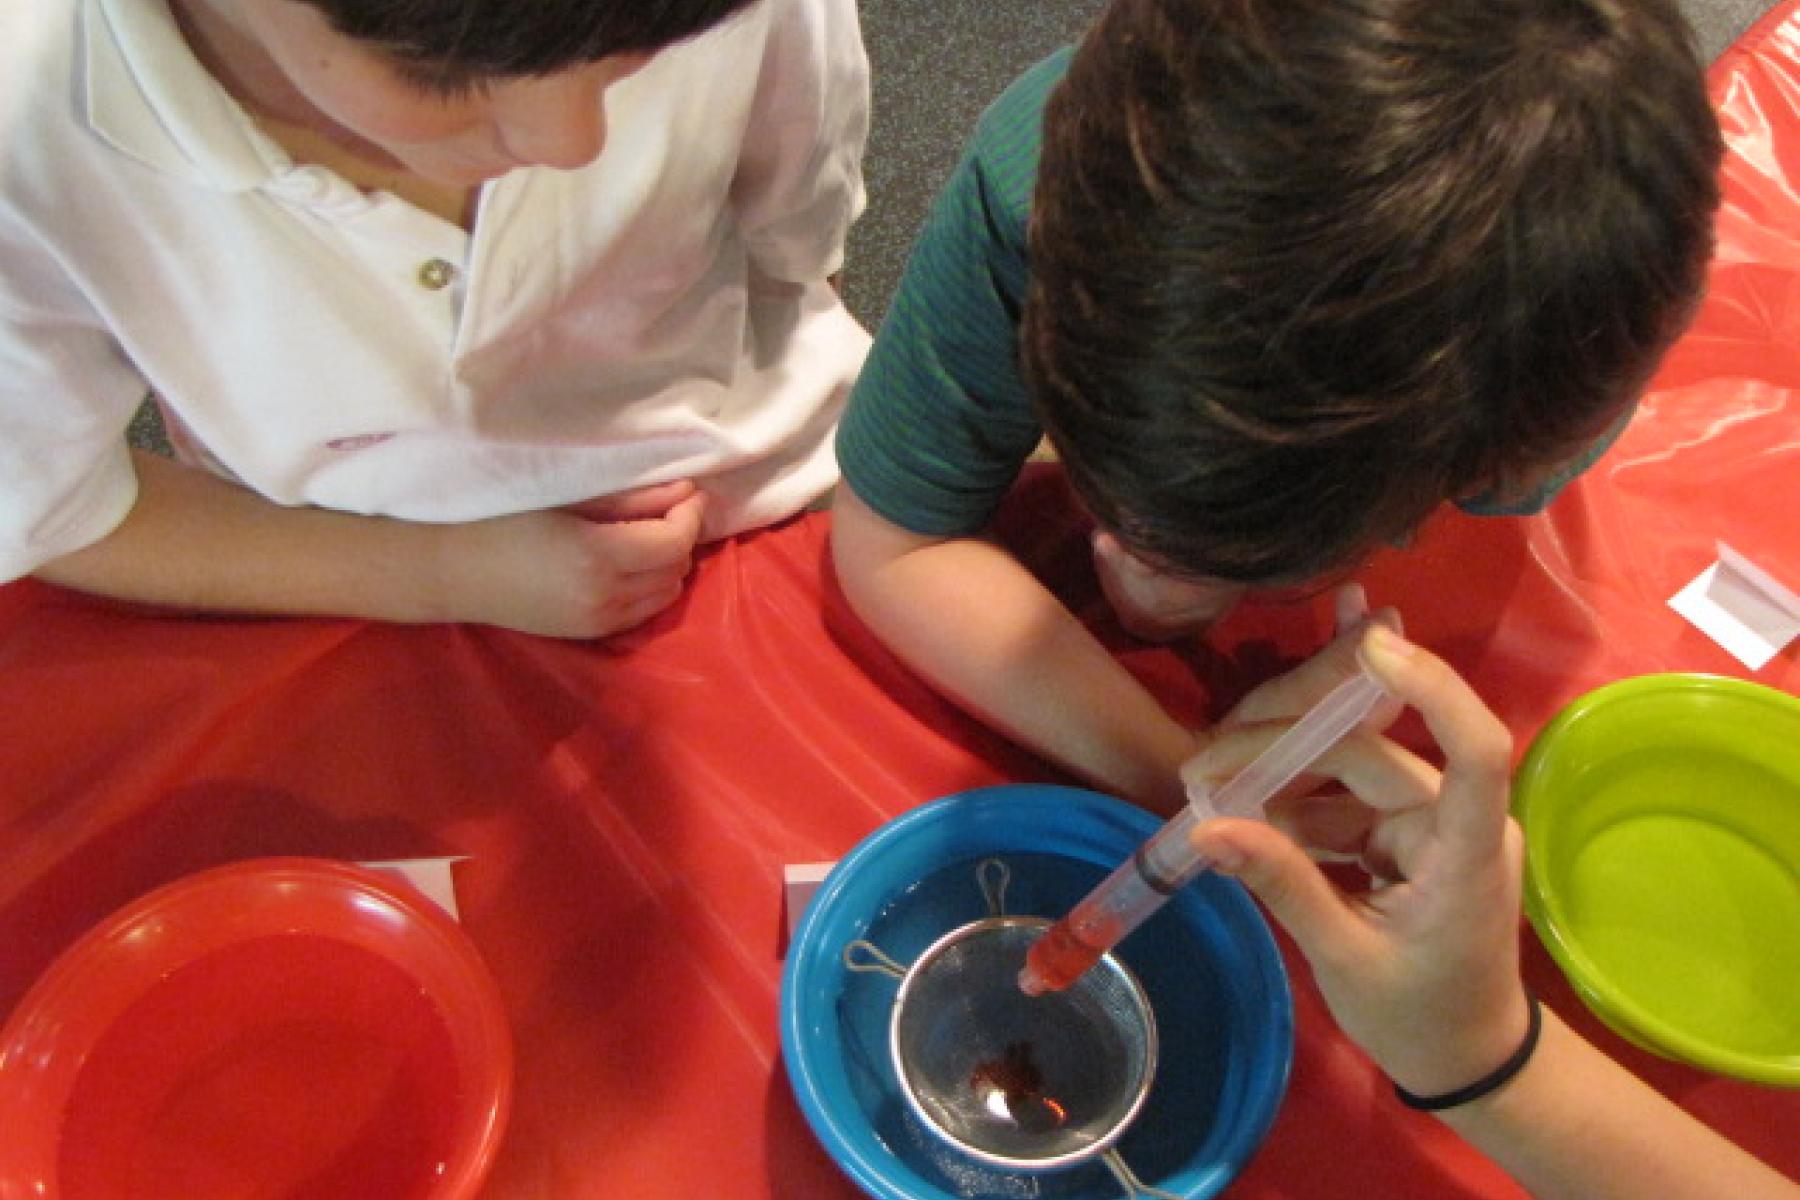 A couple kids making self-assembling spheres